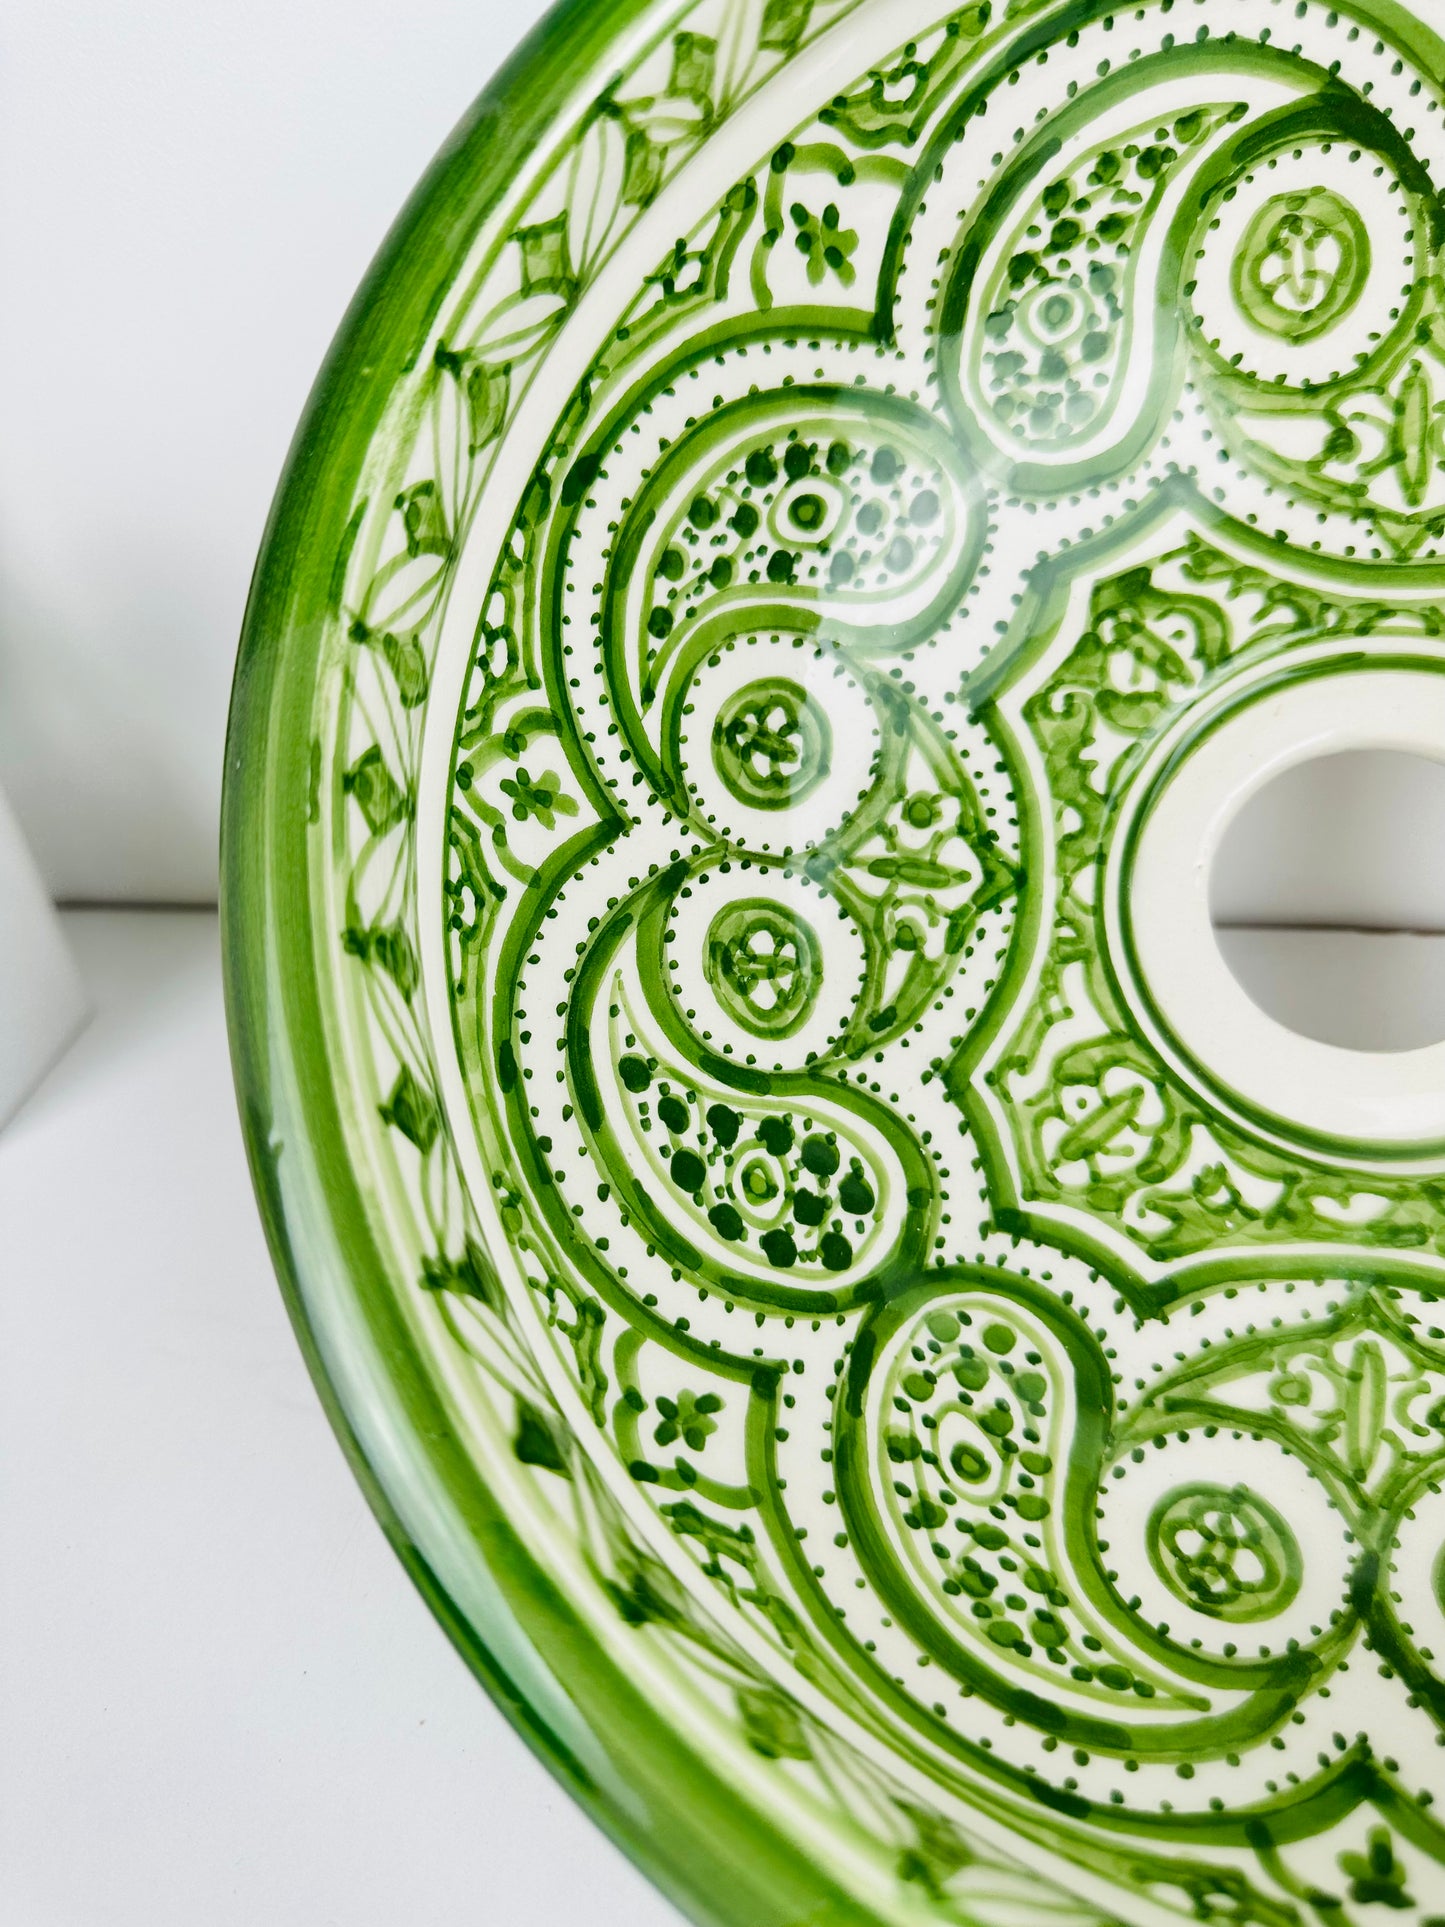 Basil Breeze: Handcrafted Ceramic Sink in Basil Green Hue